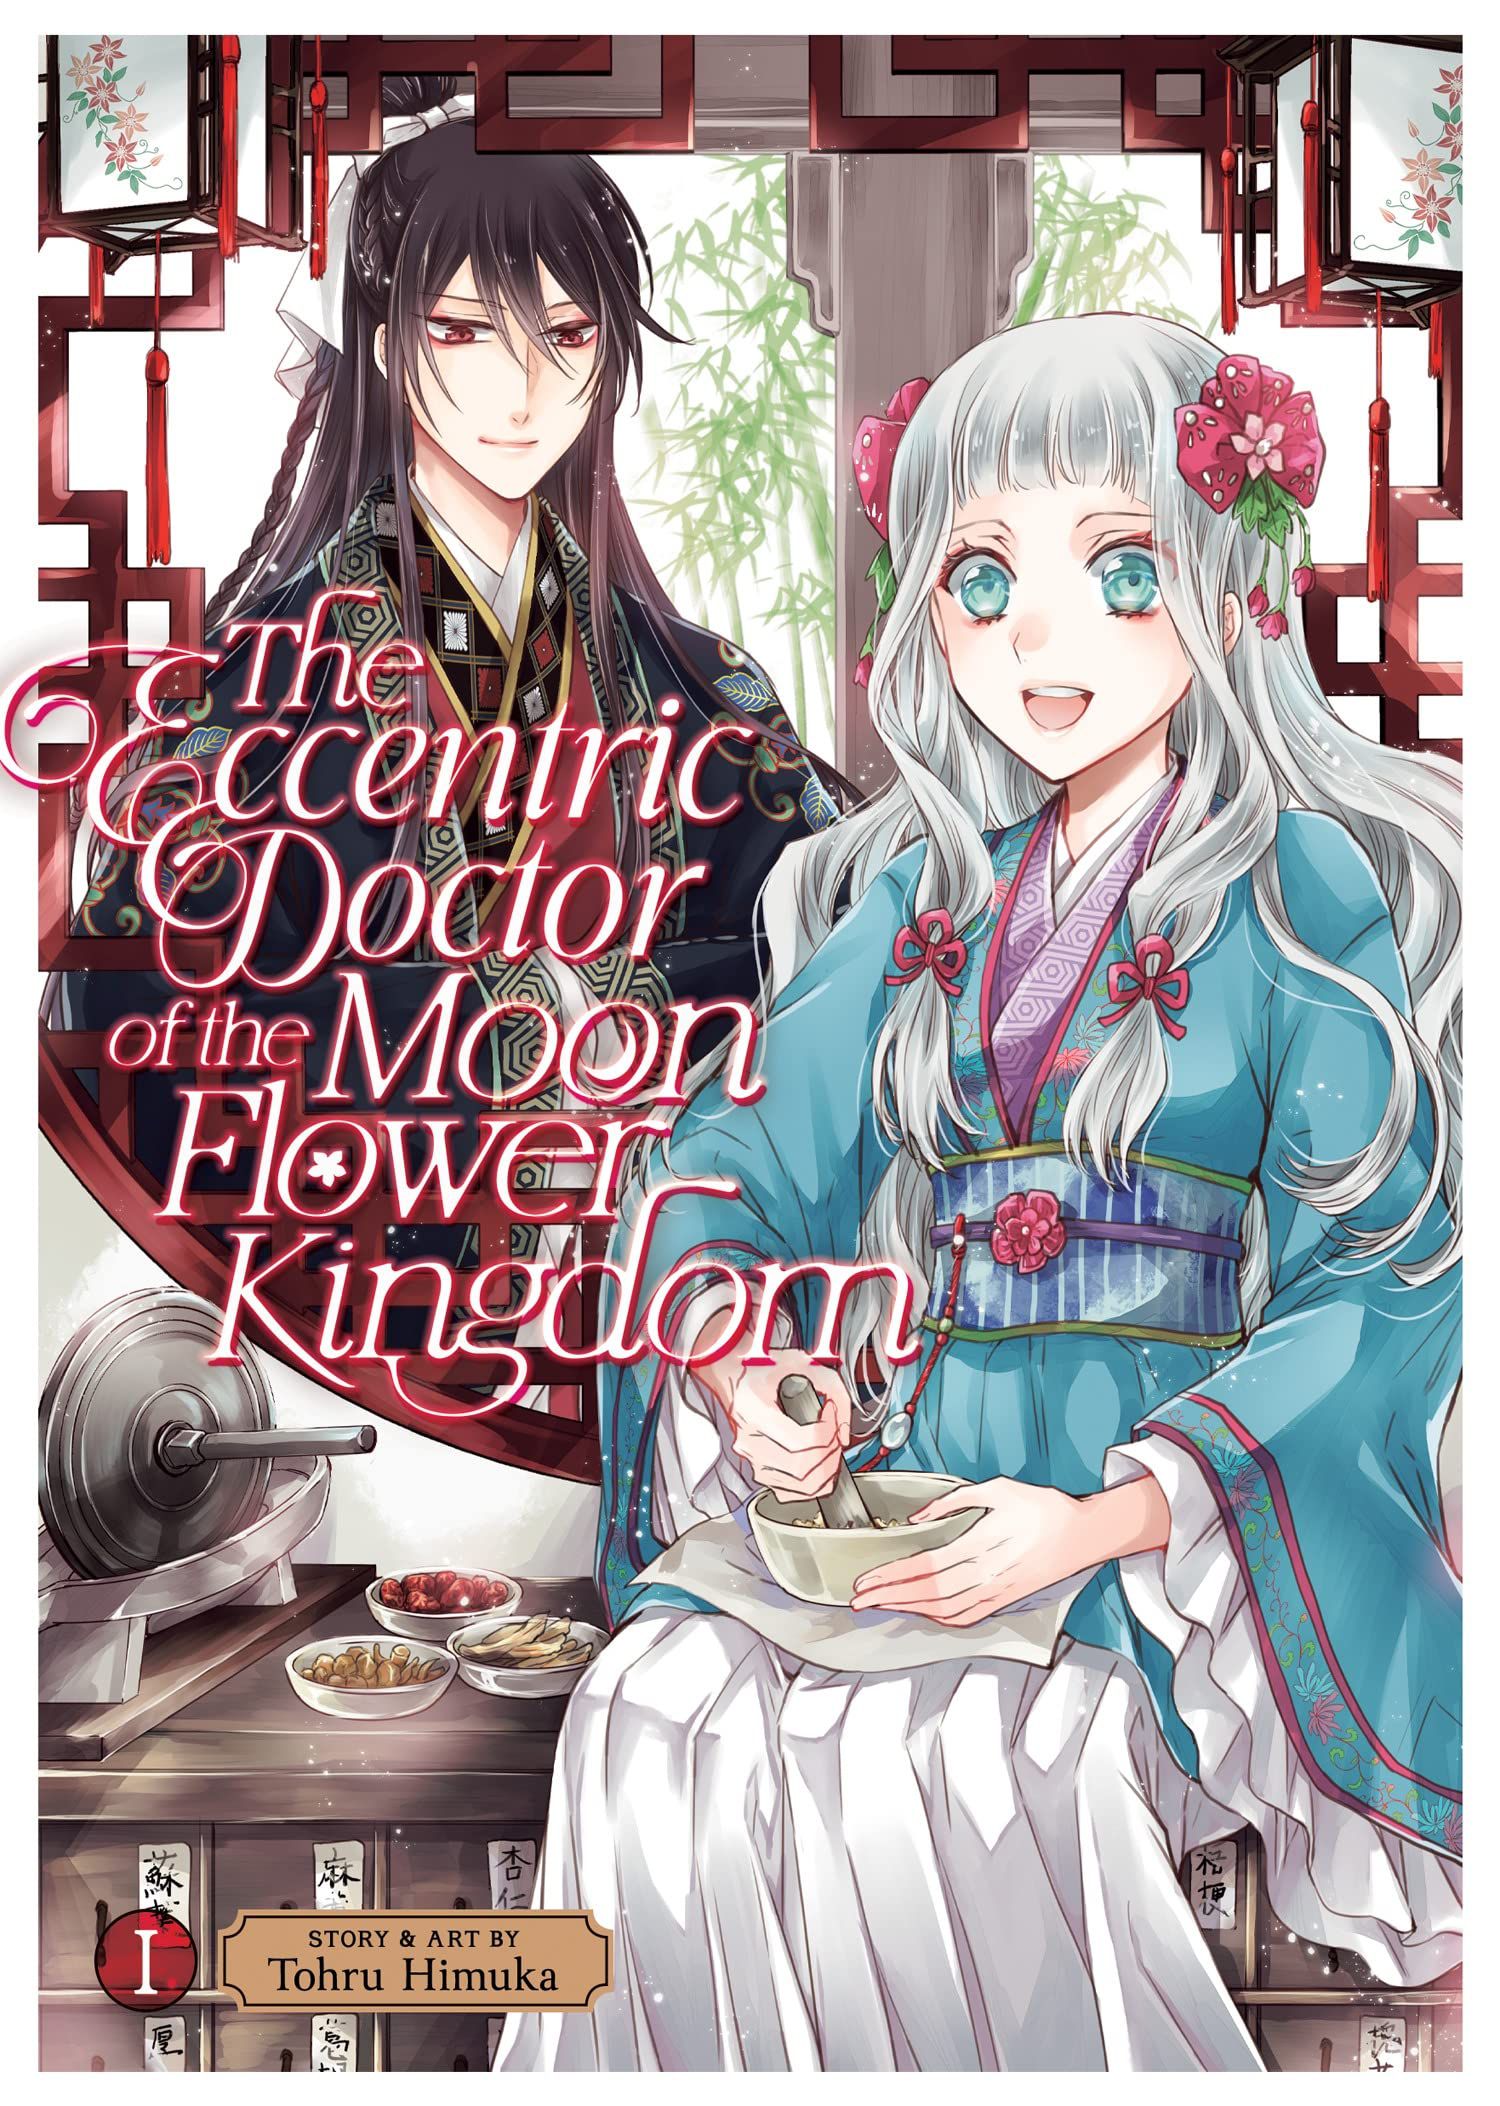 Couverture de The Excentric Doctor of the Moon Flower Kingdom par Tohru Himuka